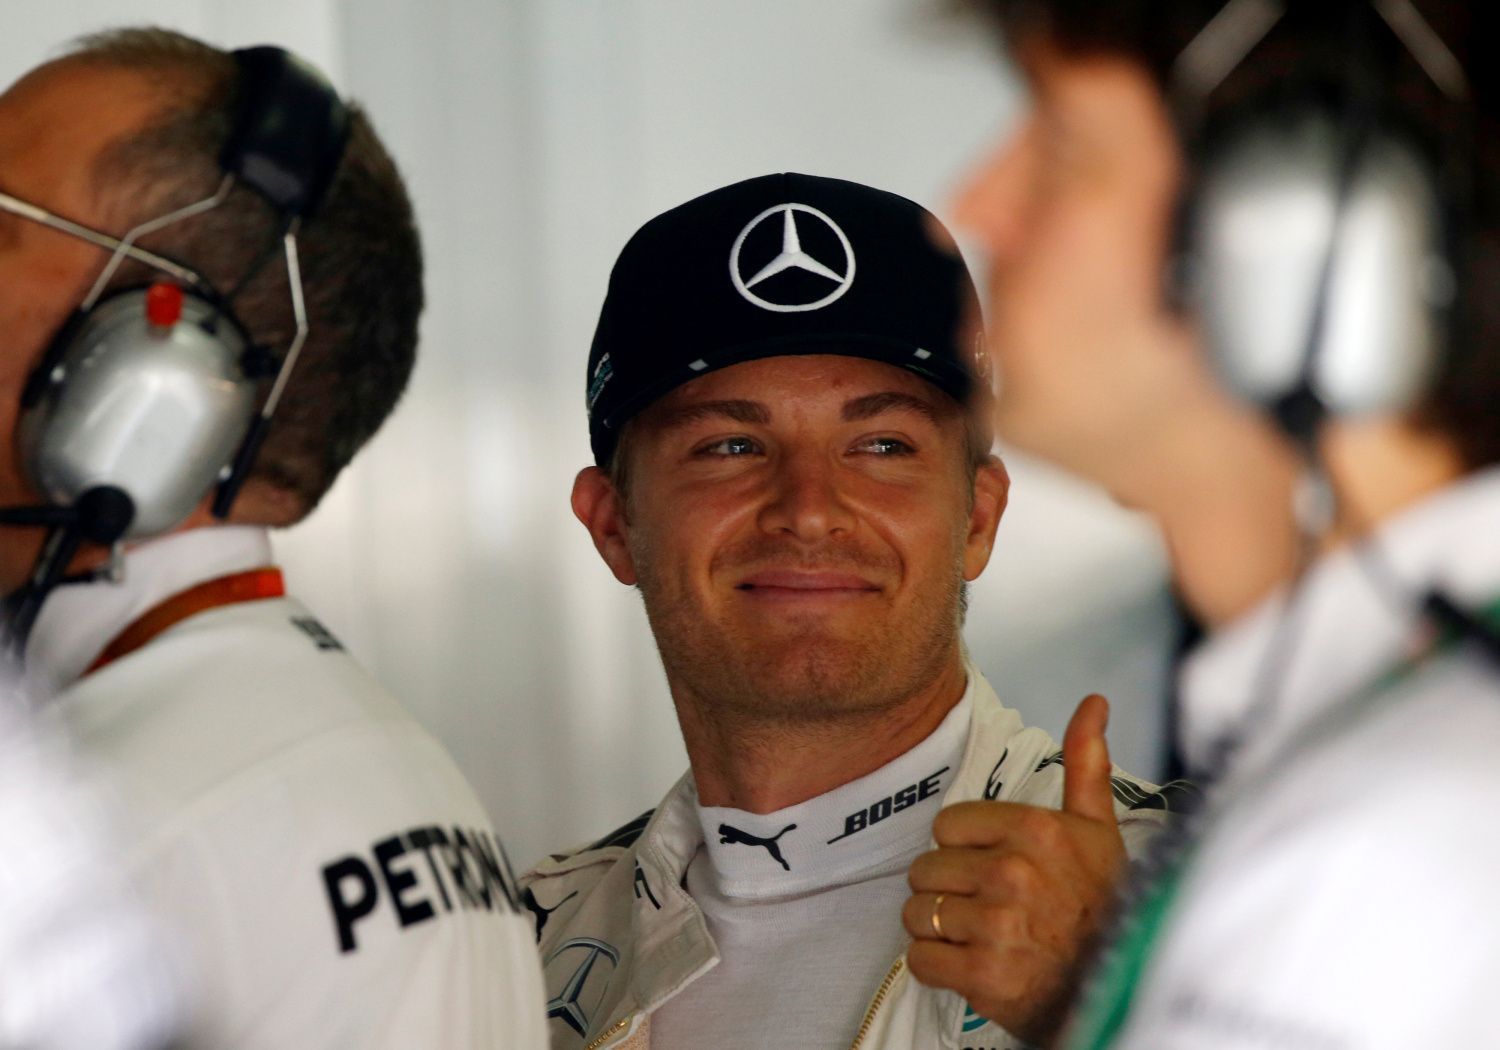 F1, VC Malajsie 2016: Nico Rosberg, Mercedes